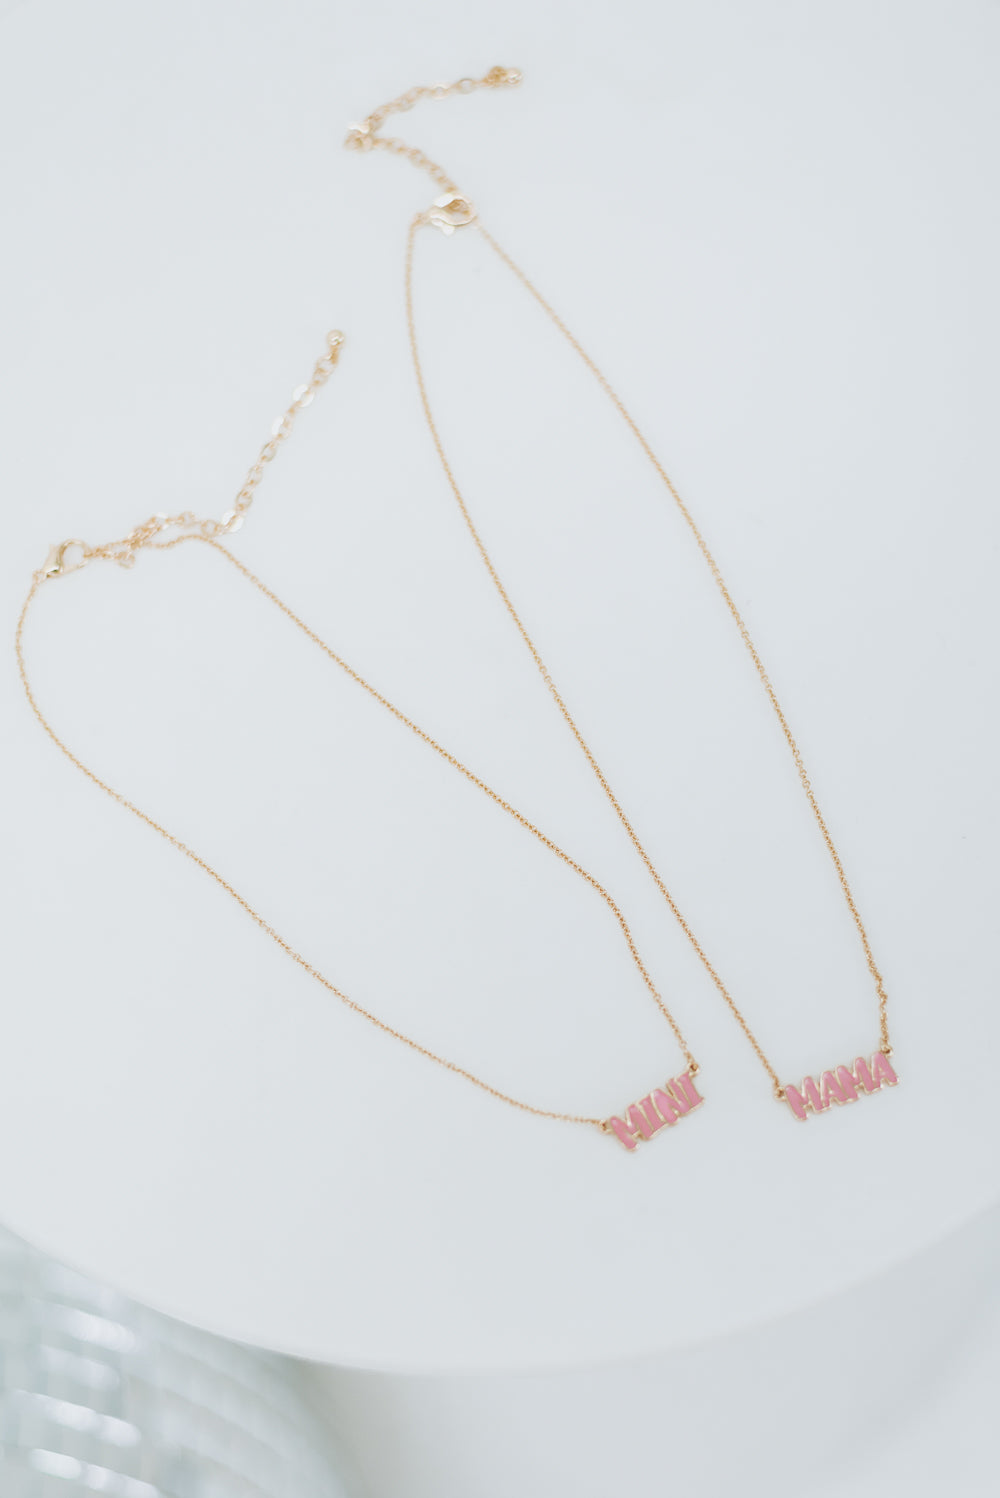 Mini & Mama Script Necklace, Pink